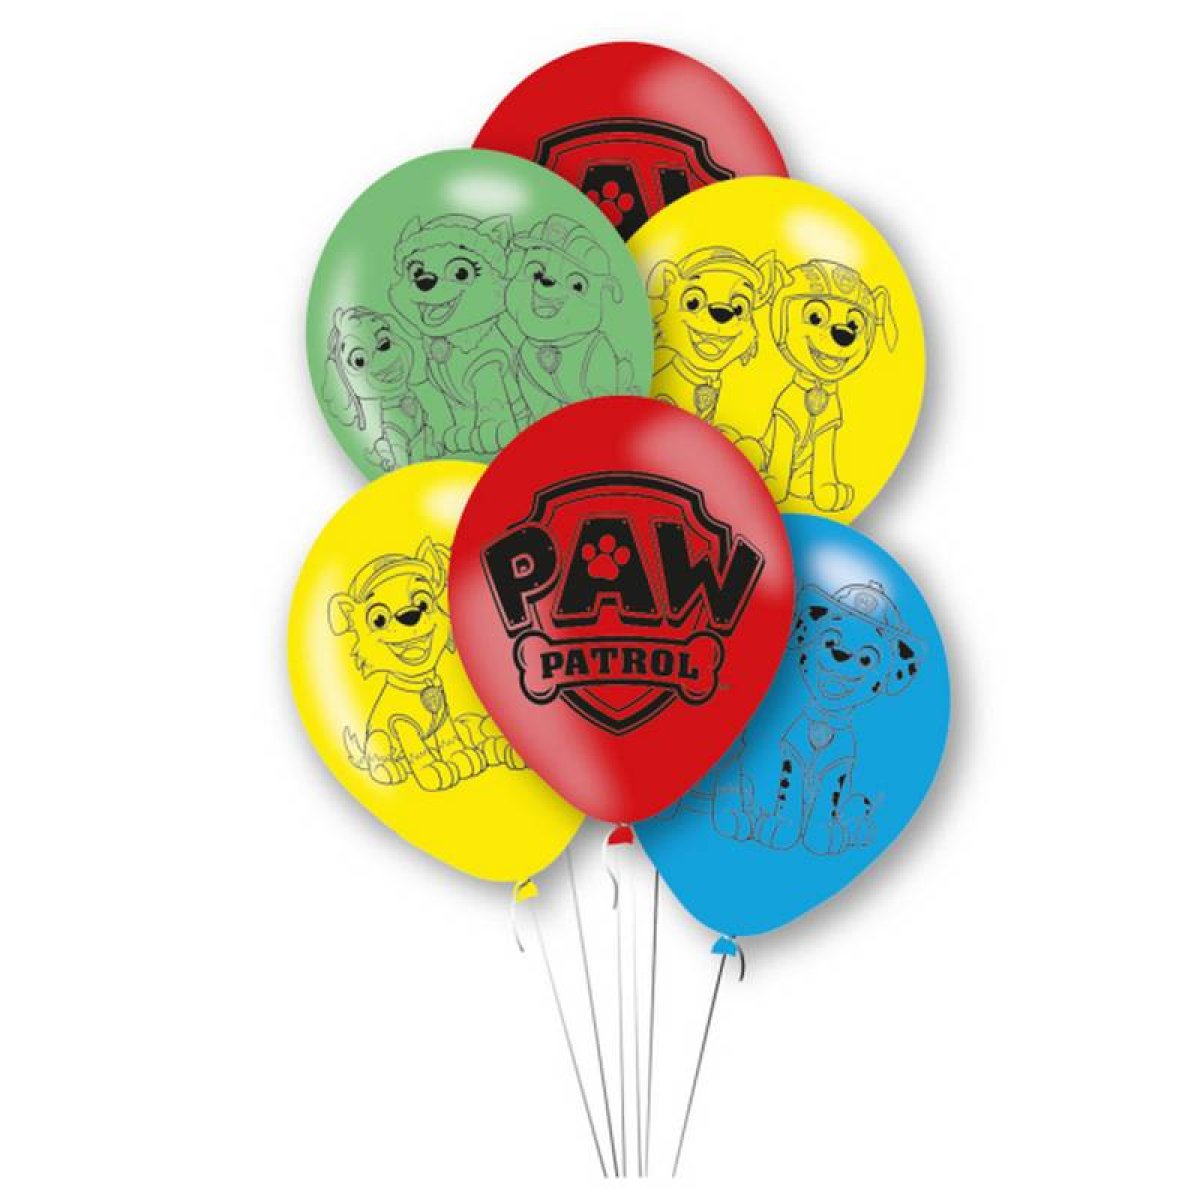 terrasse paraply Seaside Paw Patrol® Balloner til 39 kr. på Temashop.dk